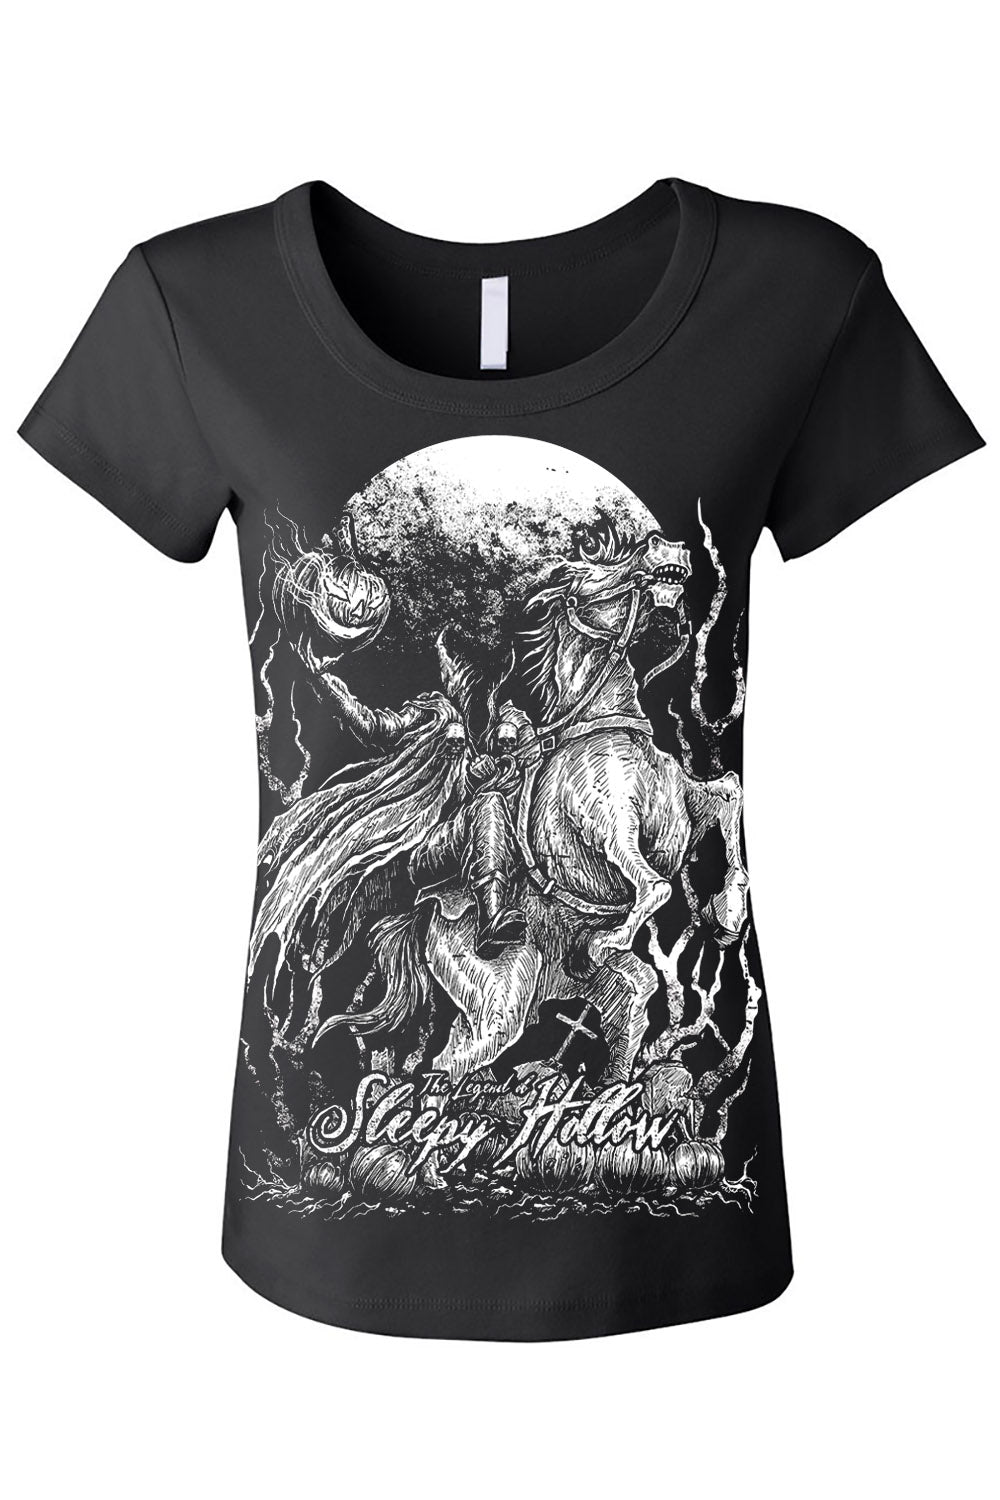 Sleepy Hollow T-shirt